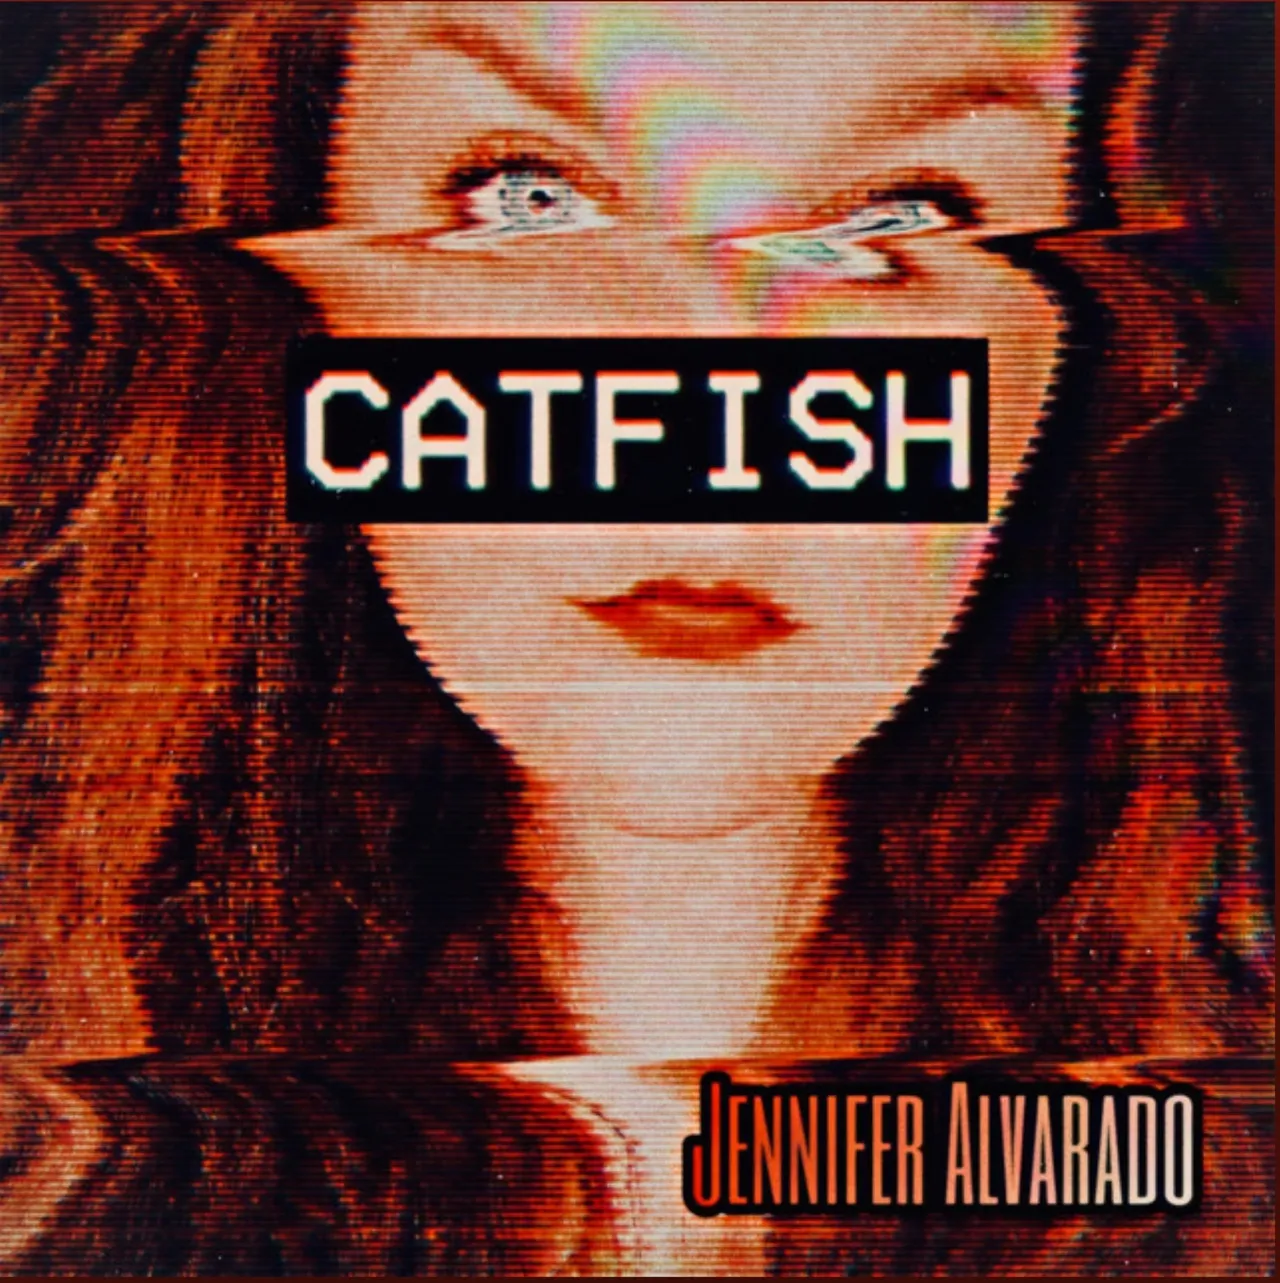 Catfish (Original Single) By Jennifer Alvarado